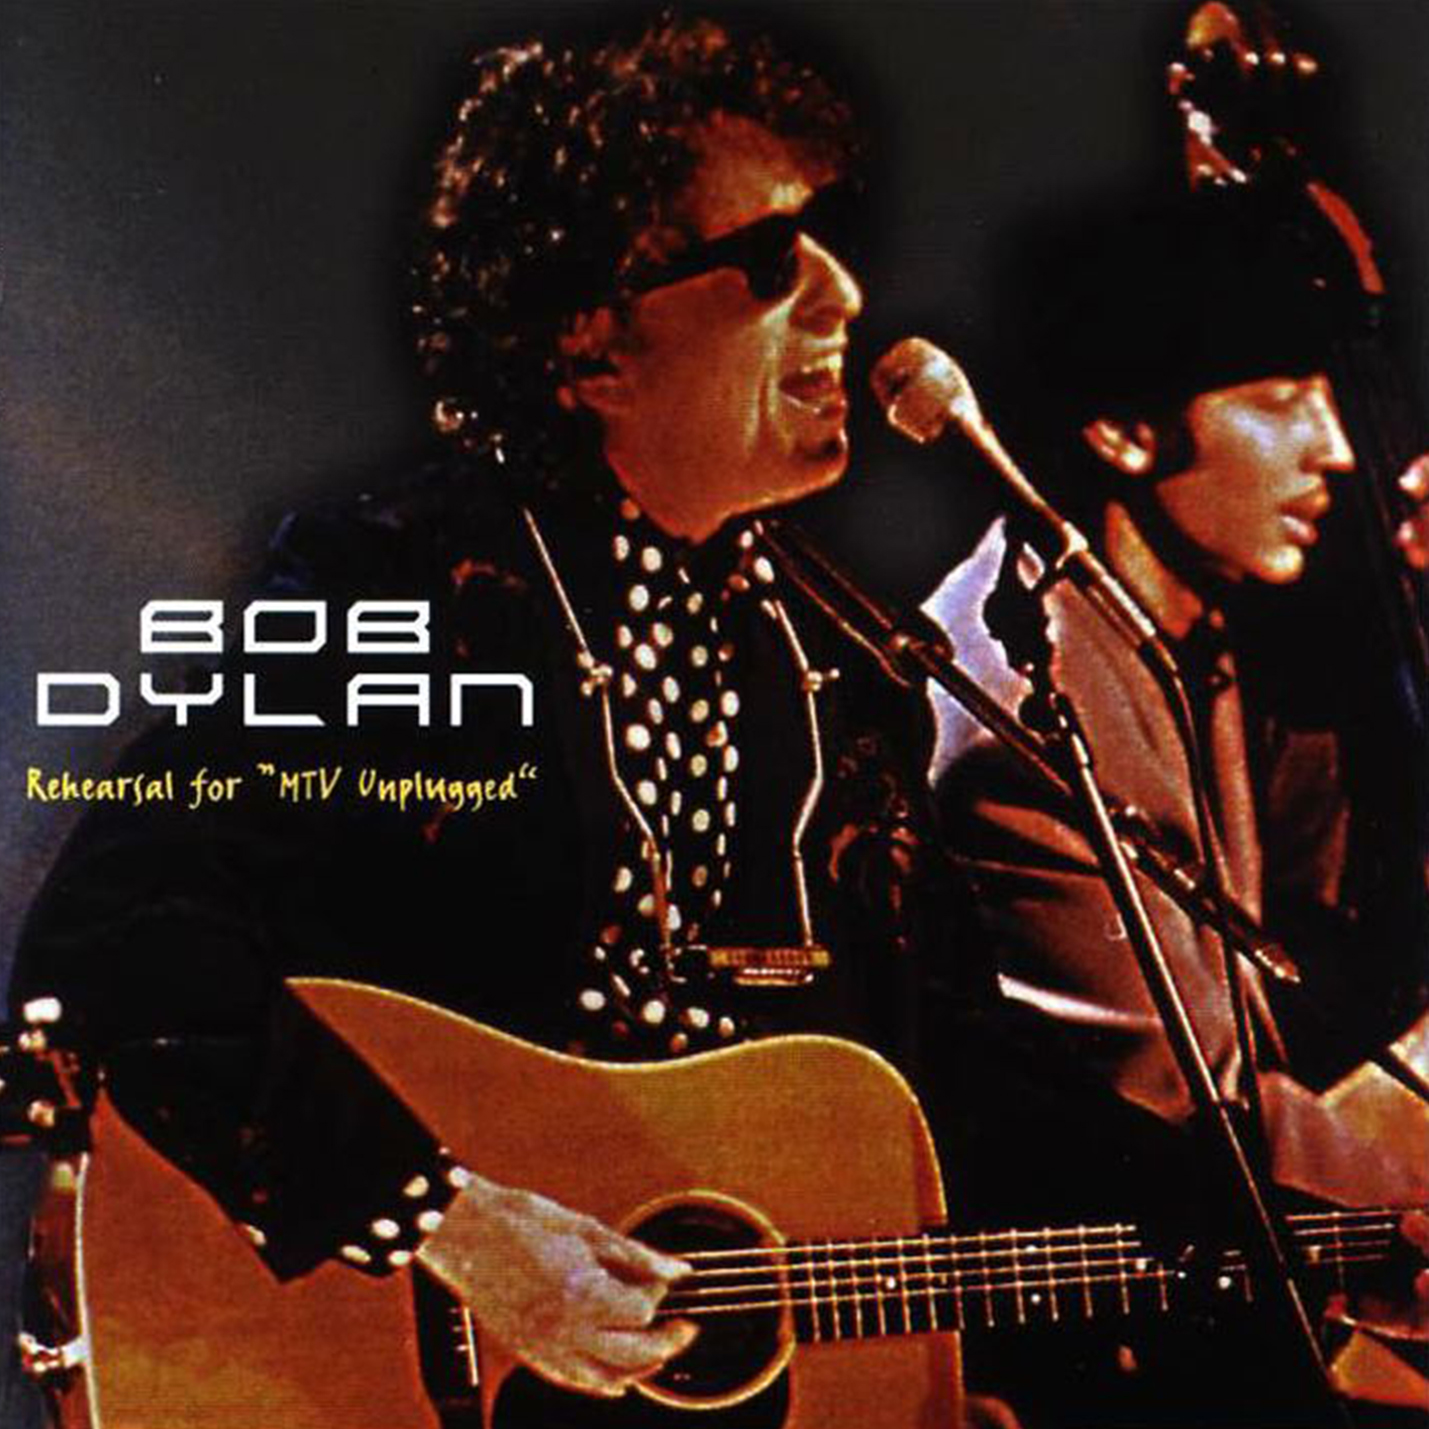 BobDylan1994-11-15RehearsalForMTVUnpluggedSonyMusicStudiosNYC (3).jpg